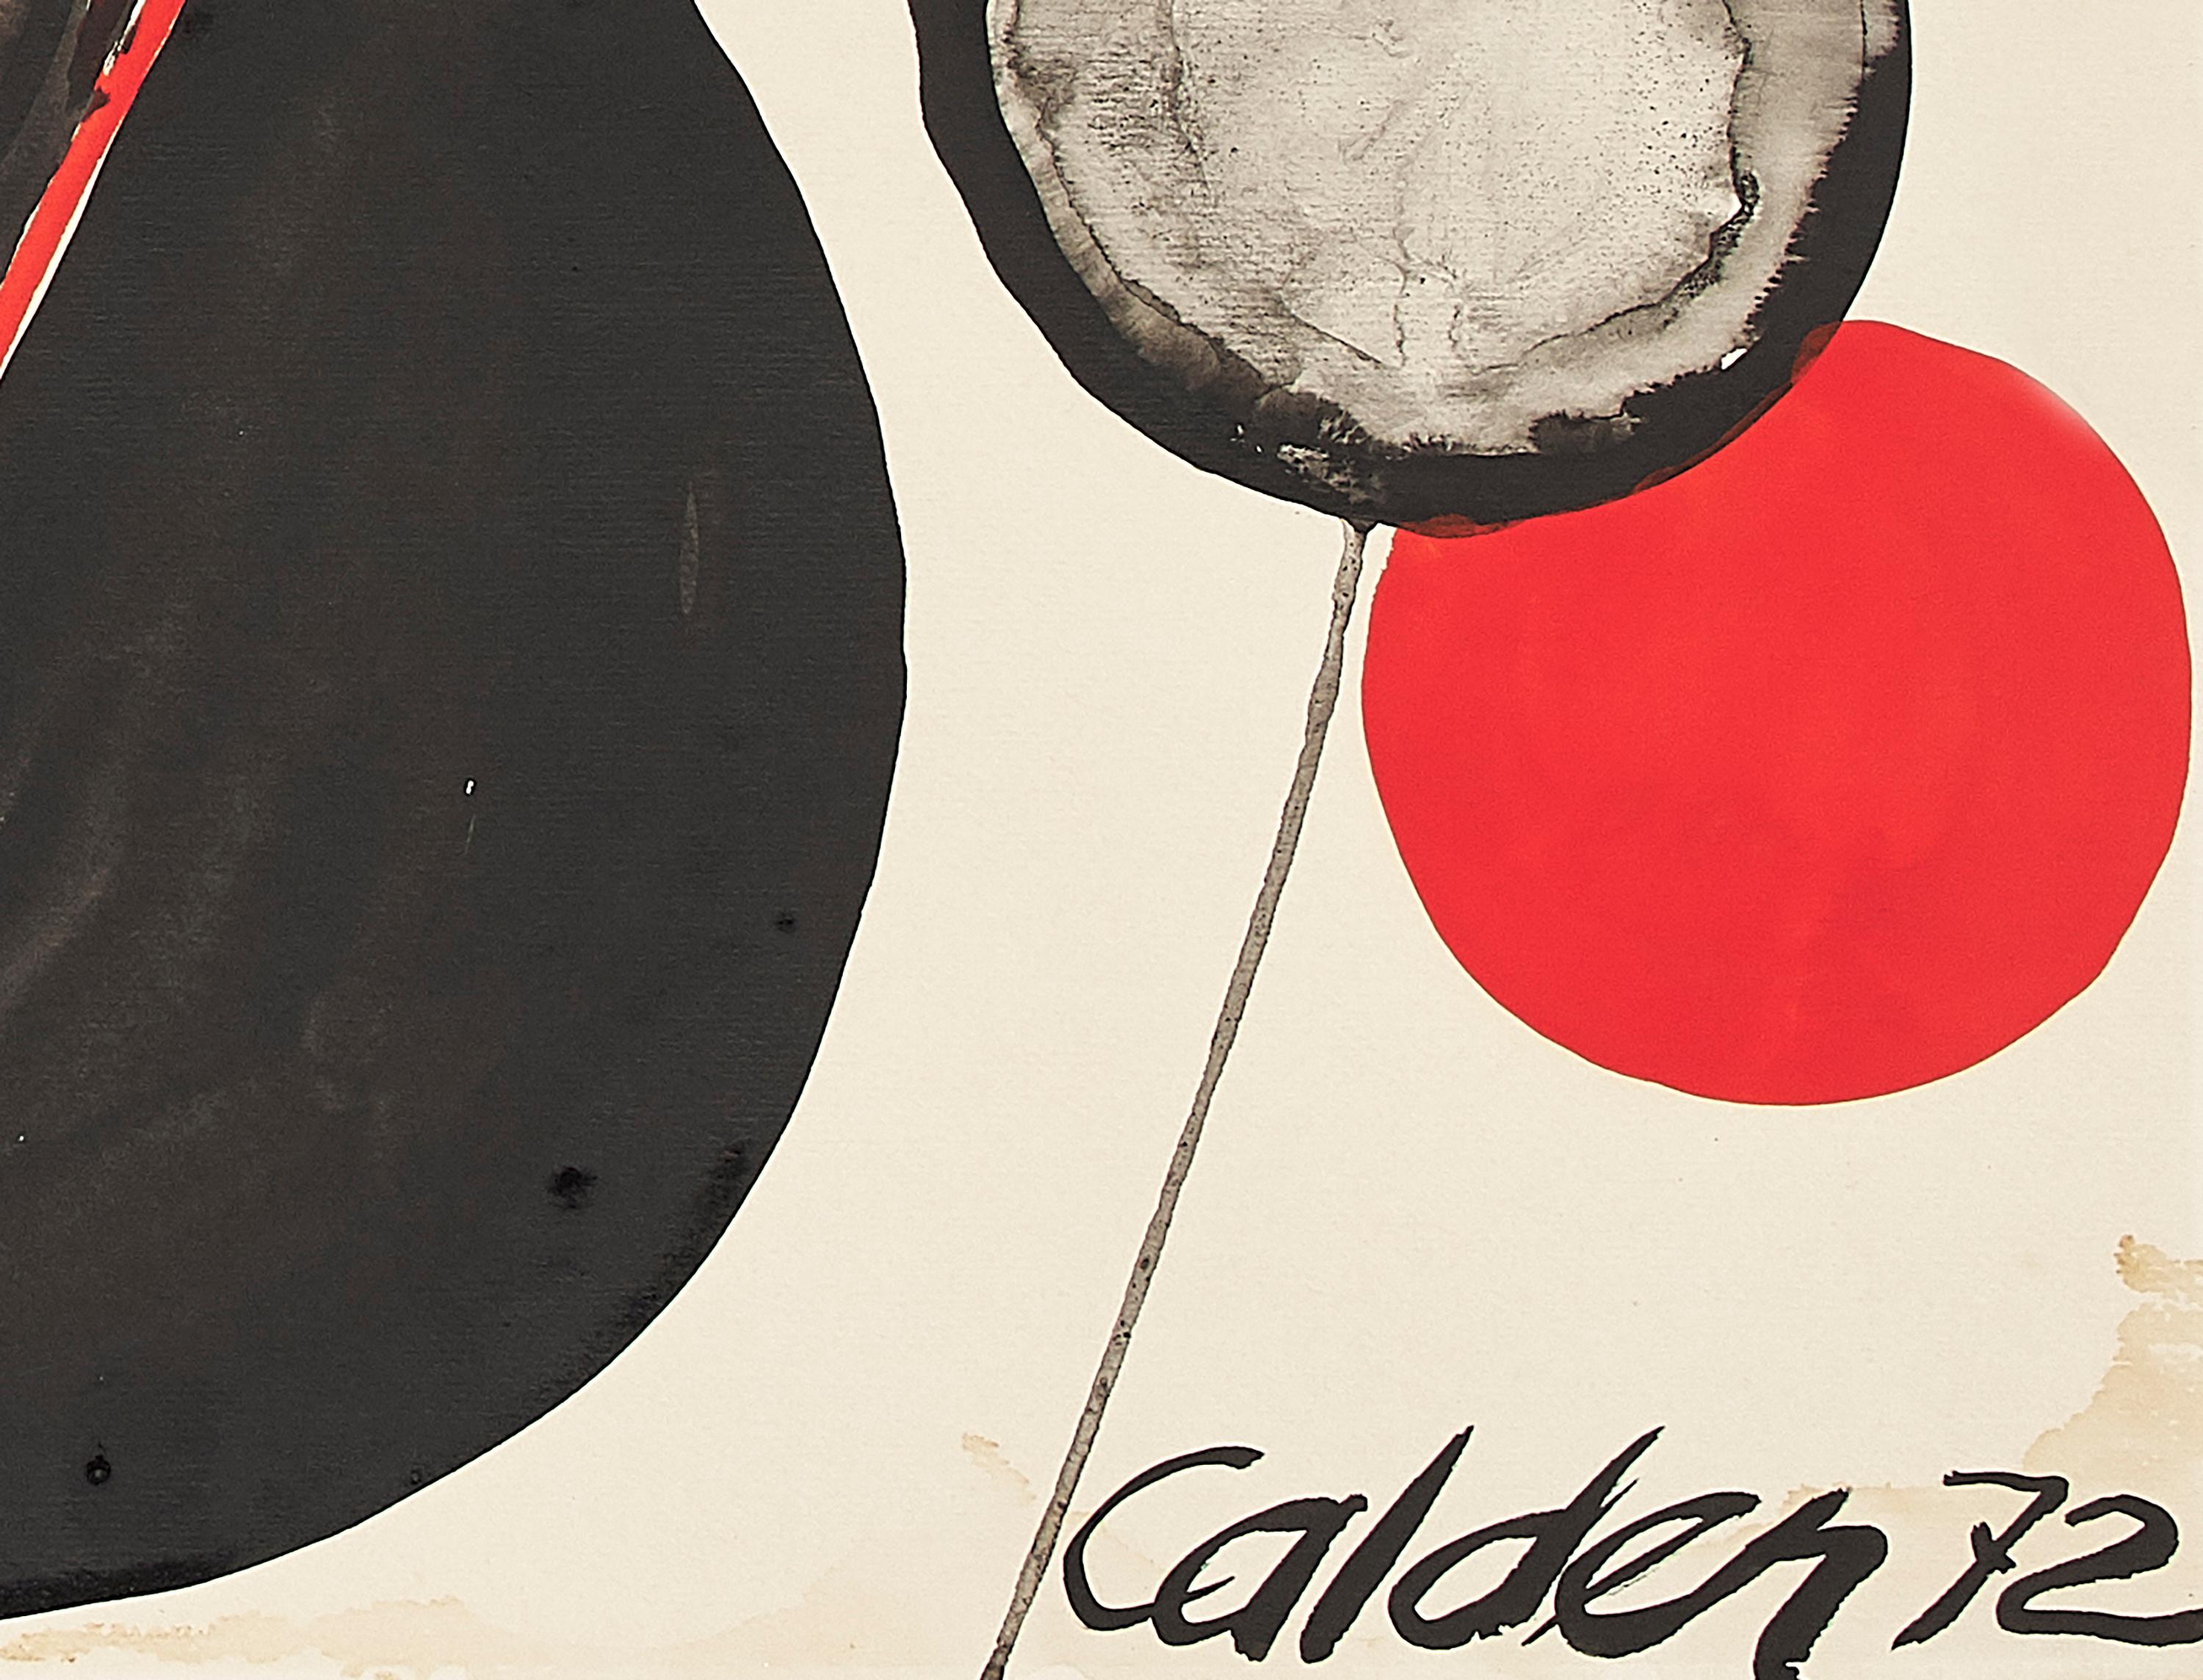 Vive - Painting by Alexander Calder